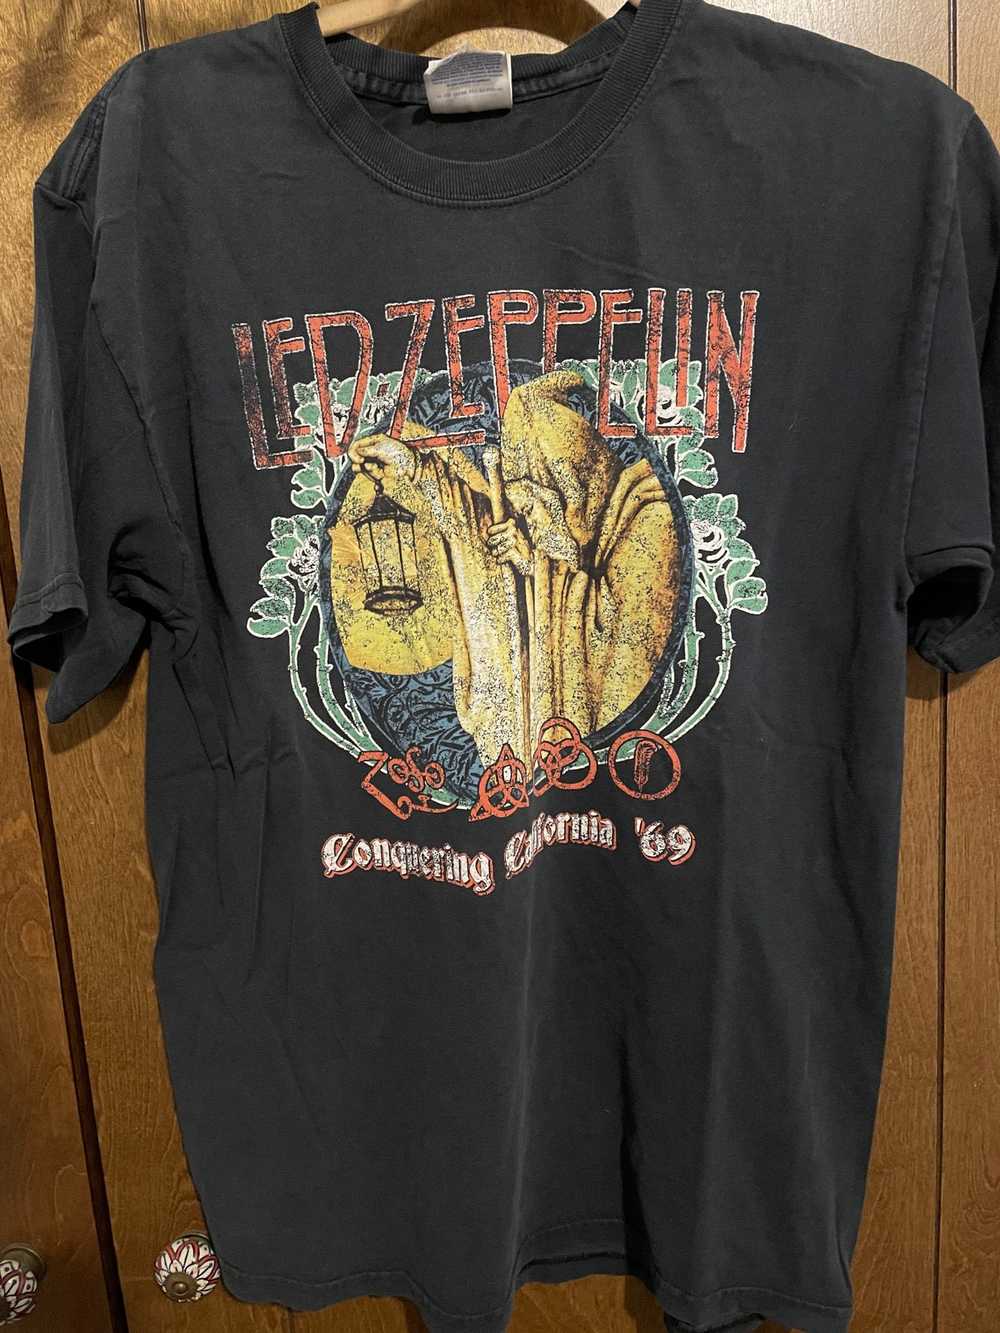 Band Tees Led Zeppelin Tee - image 1